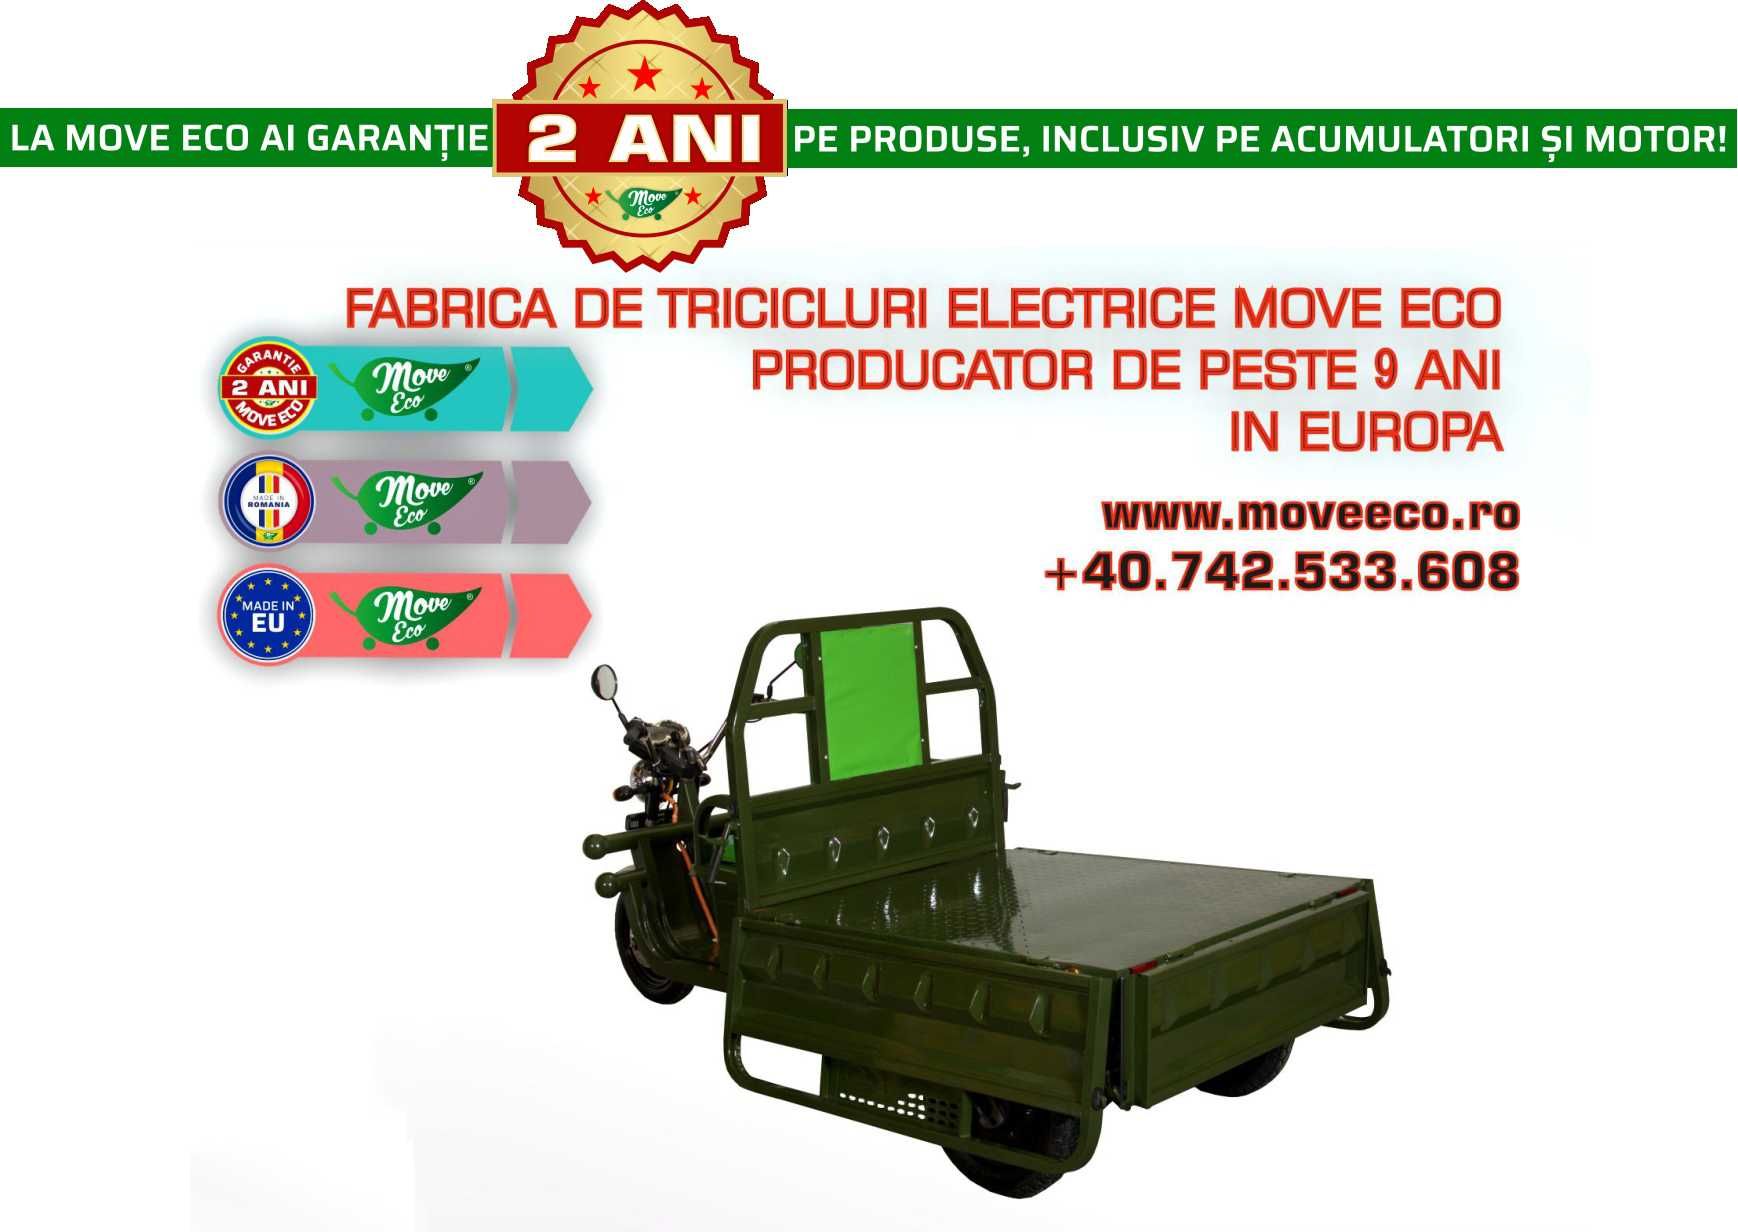 Triciclu Electric Omologat MoveEco /6 RATE fara dobanda -garantie 2ANI